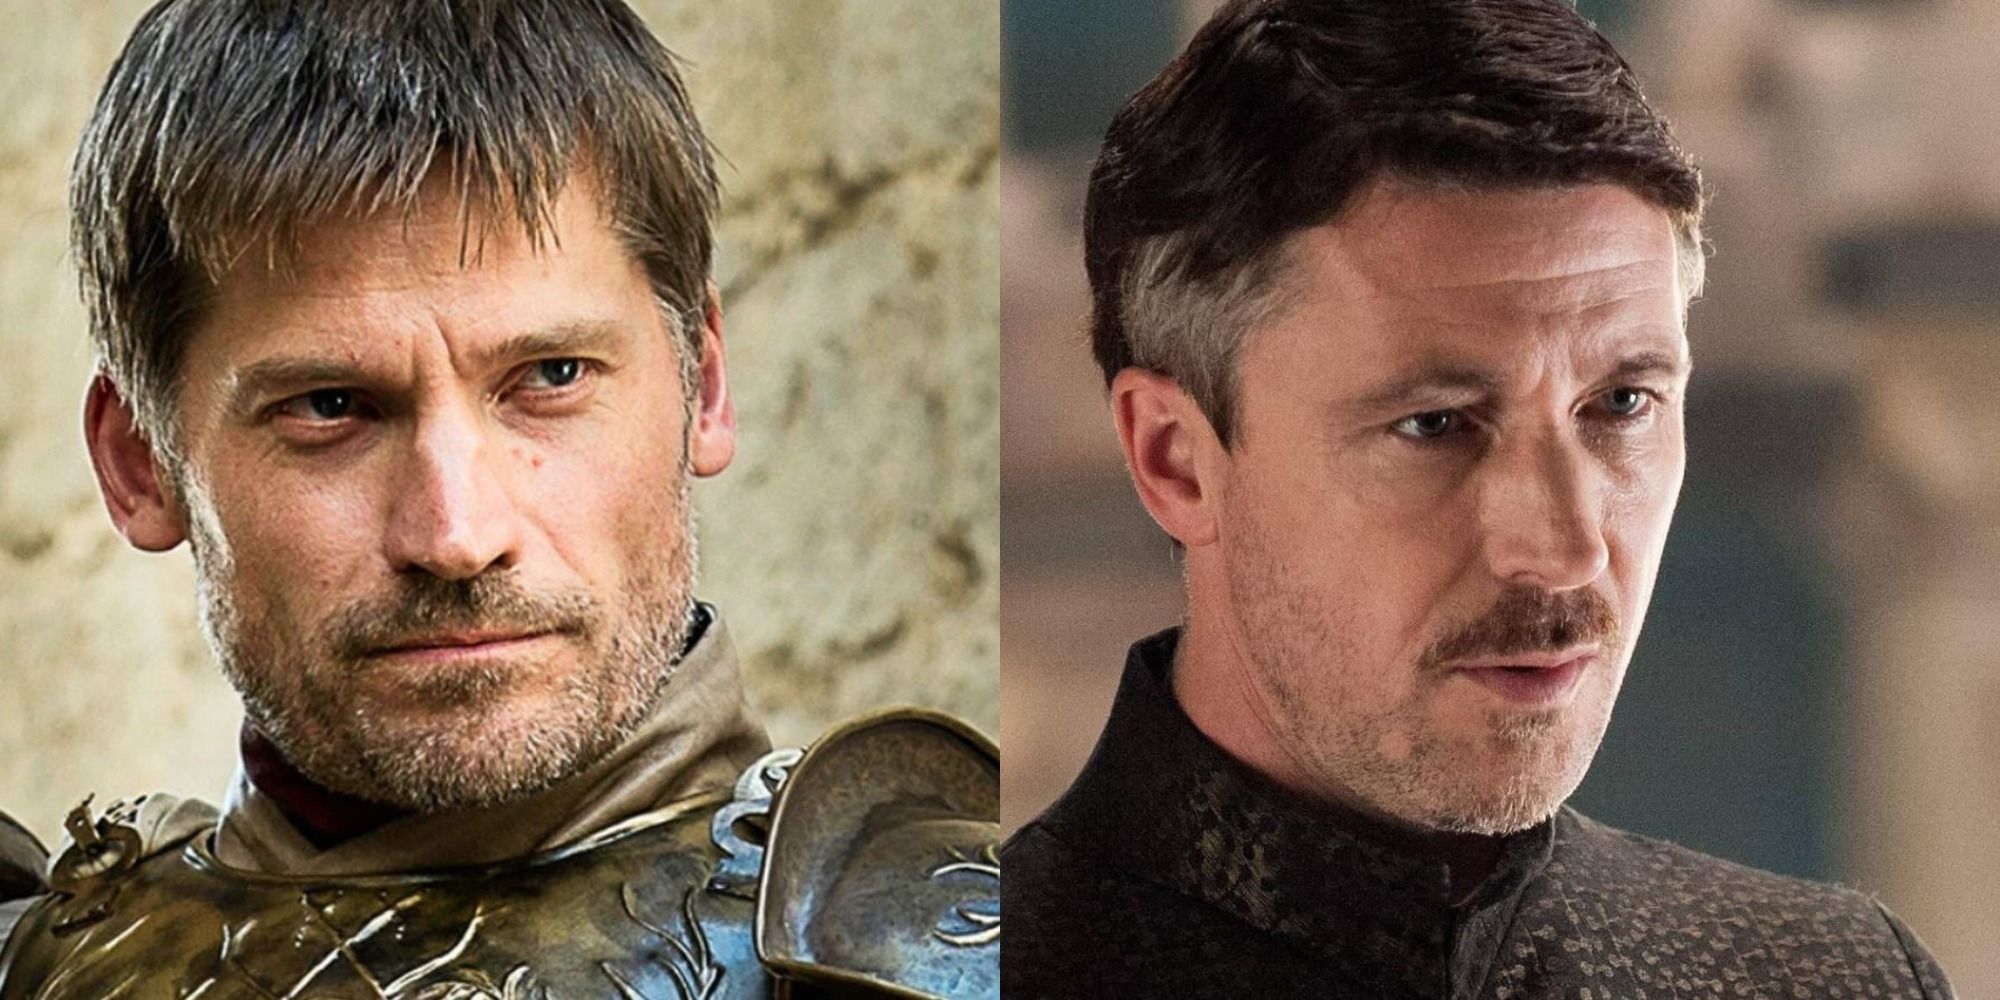 Nikolaj-Coster Waldau as Jaime Lannister and Aidan Gillen as Littlefinger in Game of Thrones